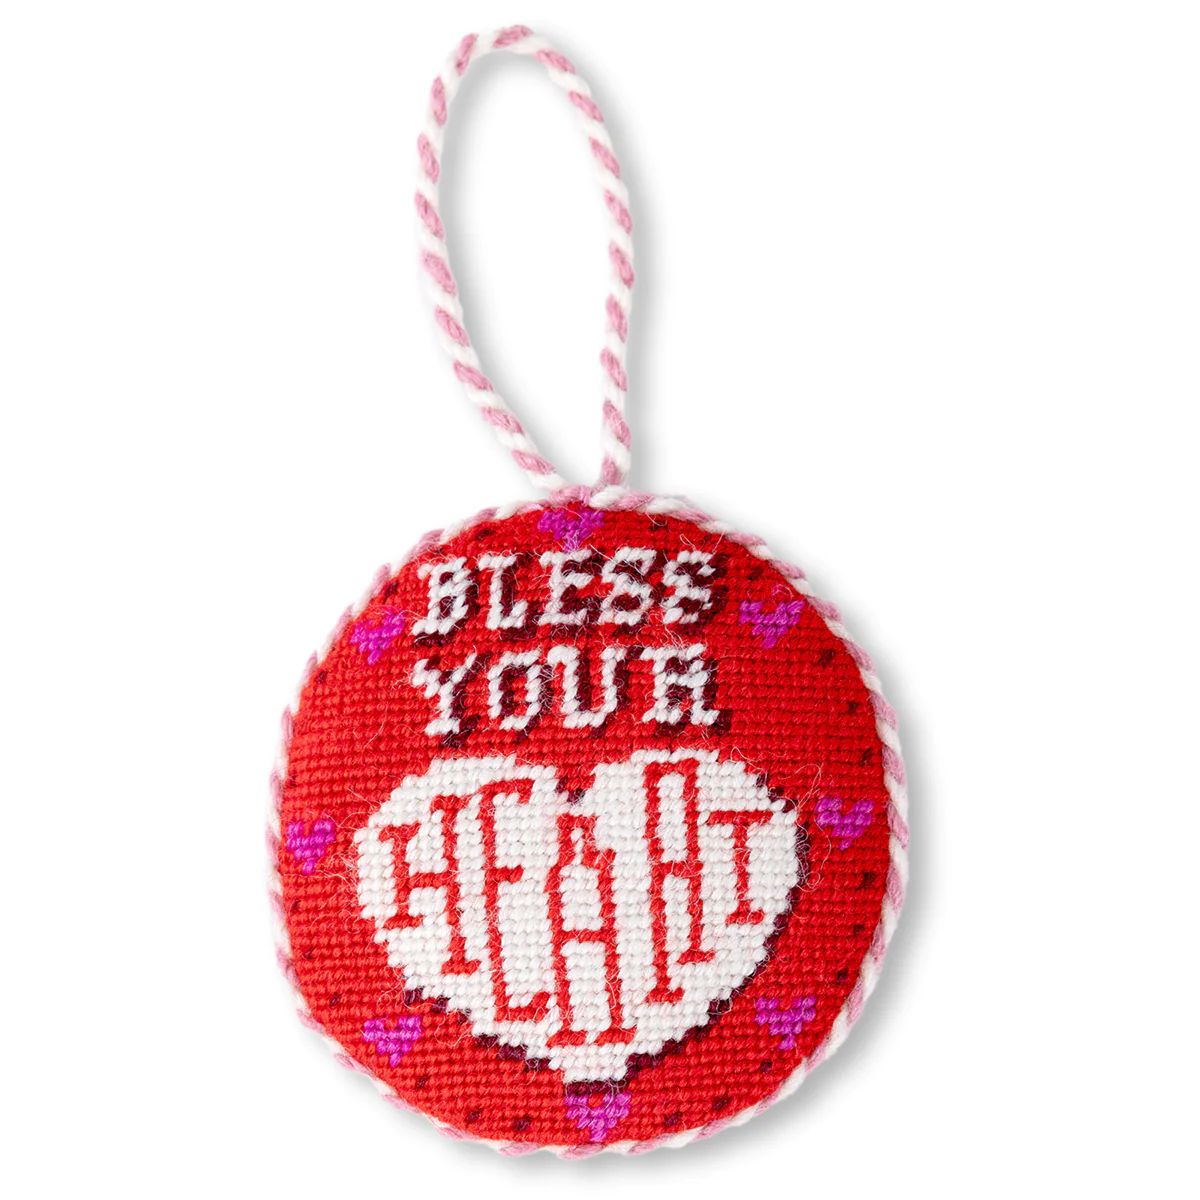 Bless Your Heart Needlepoint Ornament | Furbish Studio